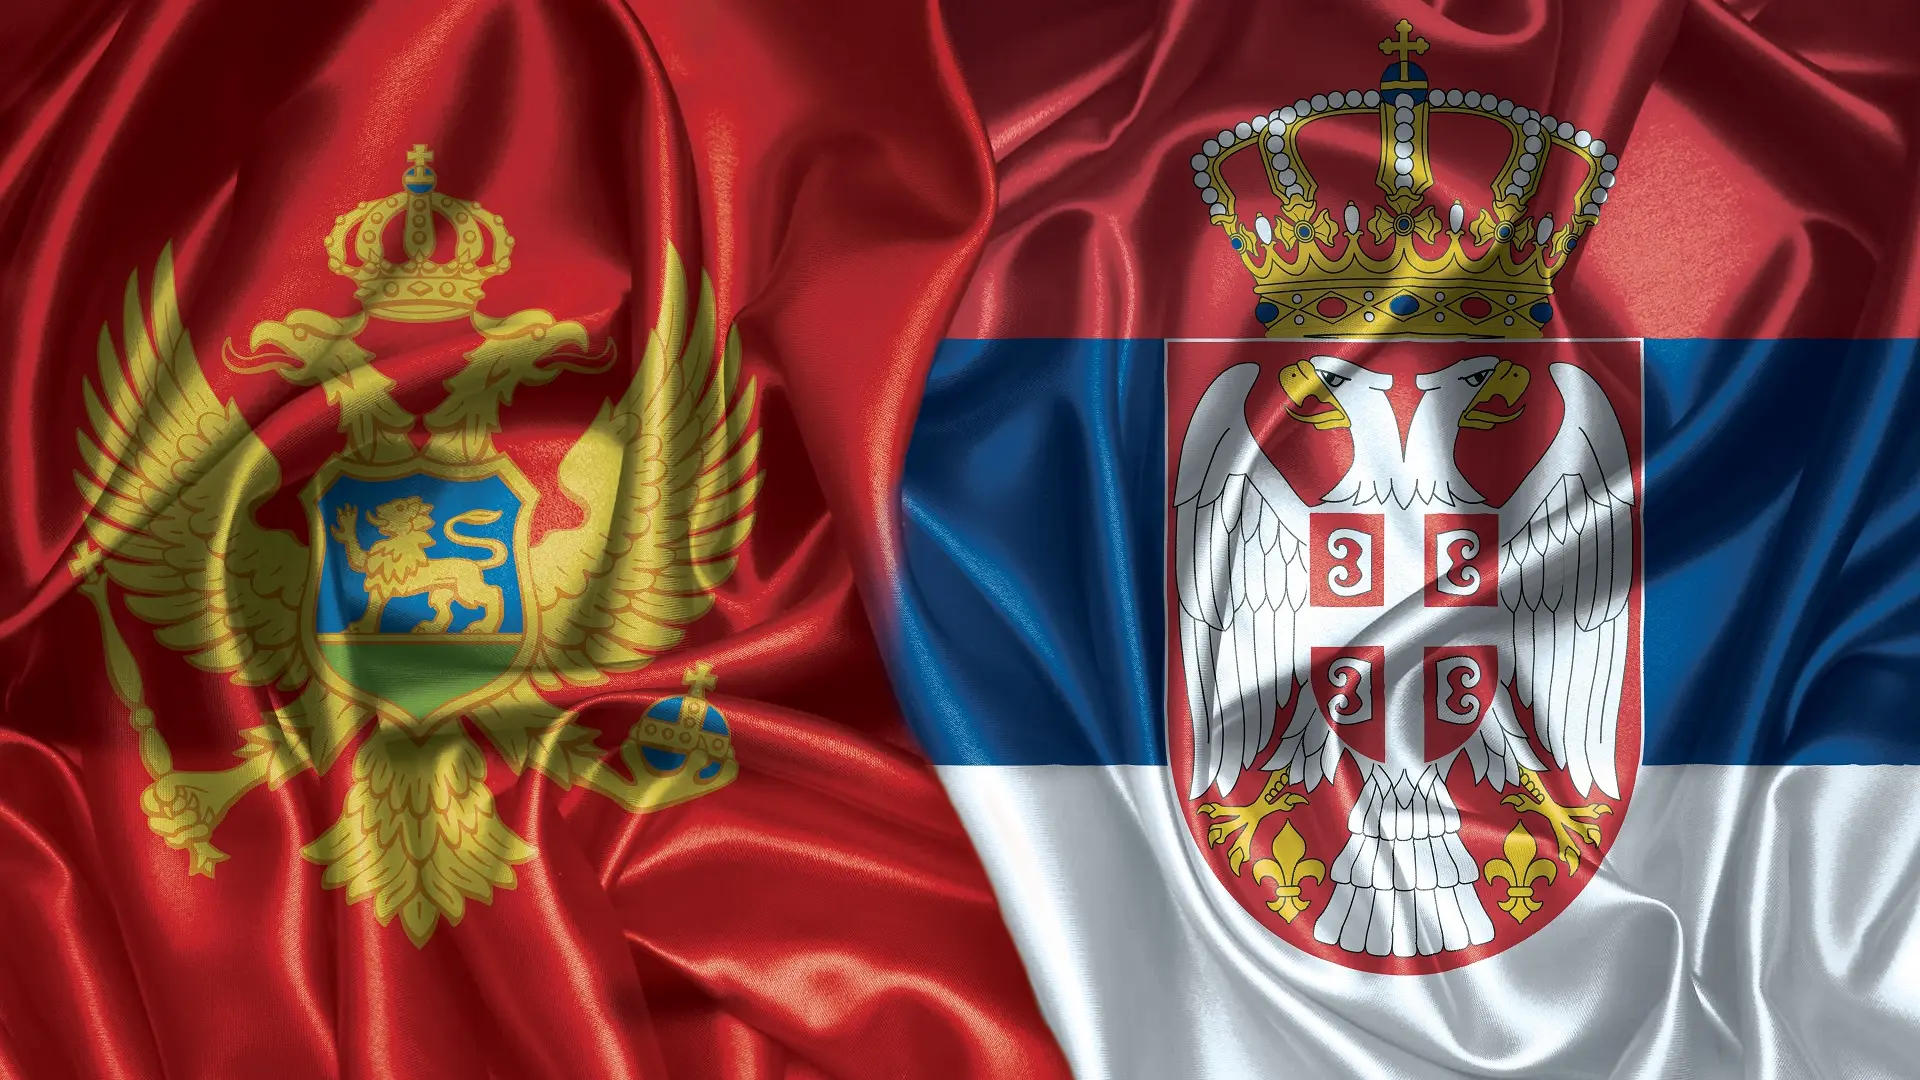 zastava, zastave crna gora, srbija, crnogorska zastava, srpska zastava - shutterstock-6584333fc62ad.webp